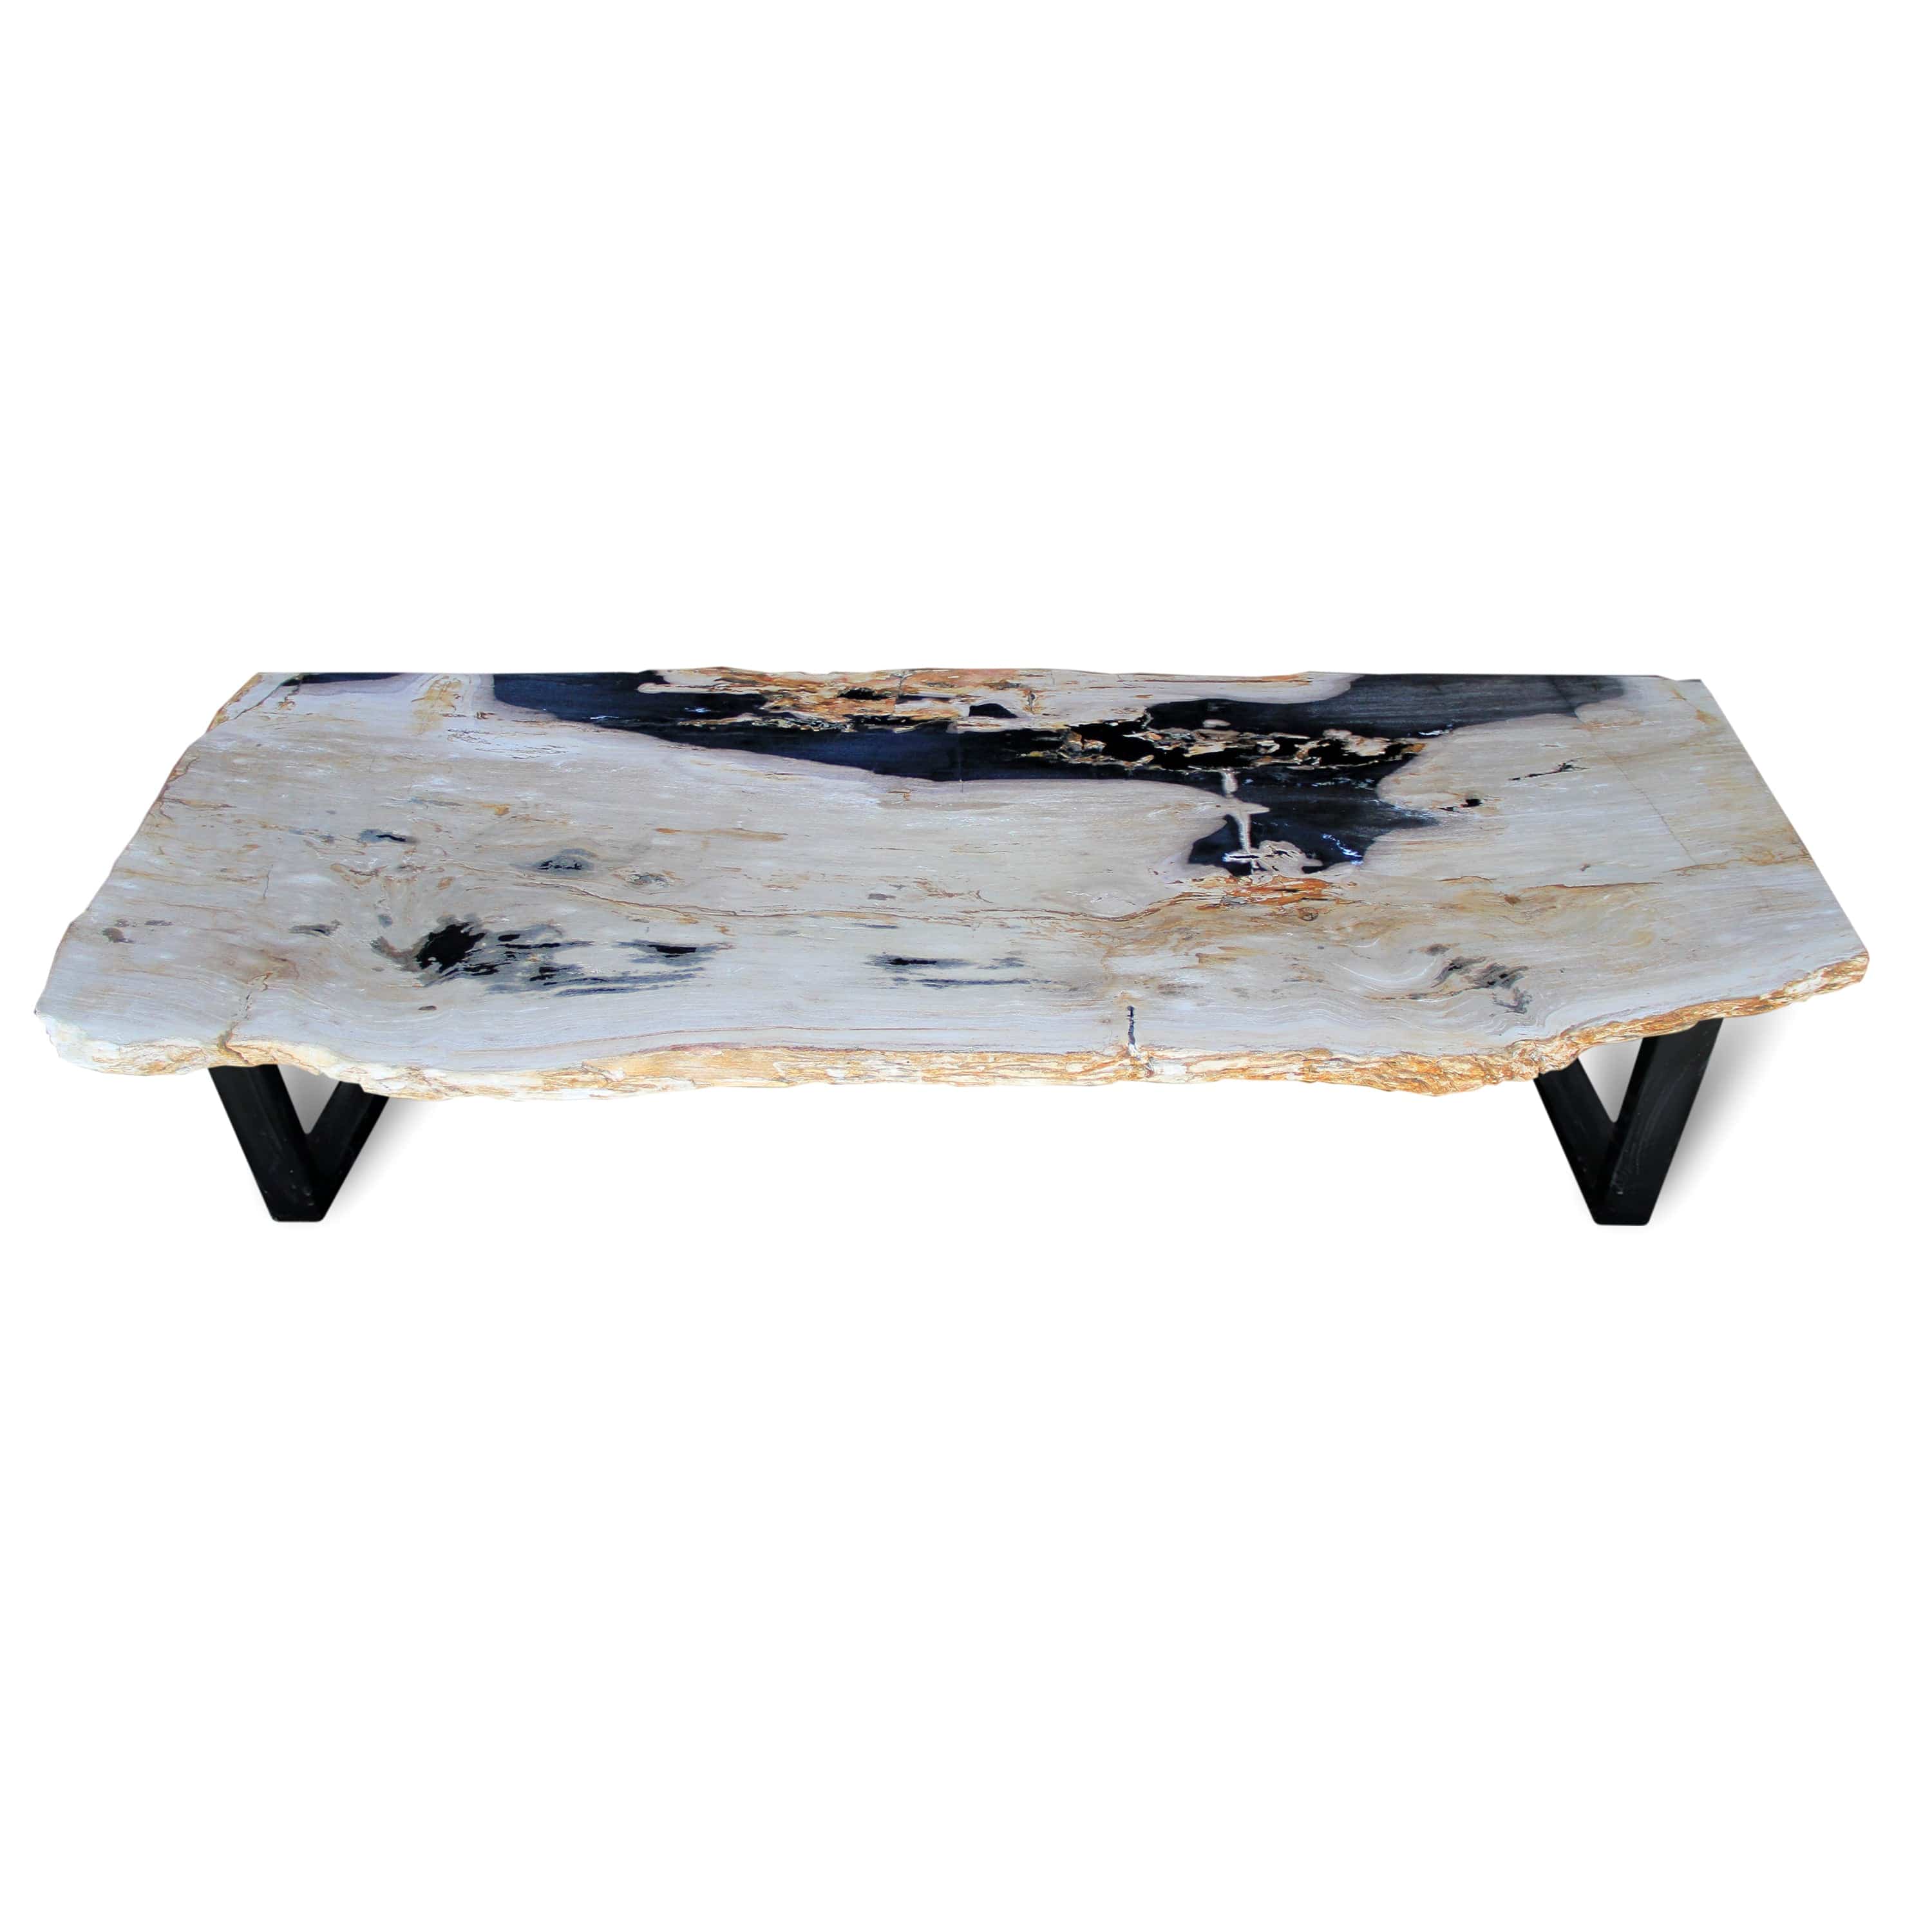 Kalifano Petrified Wood Polished Petrified Wood Table from Indonesia - 74" / 293 lbs PWR10640.001